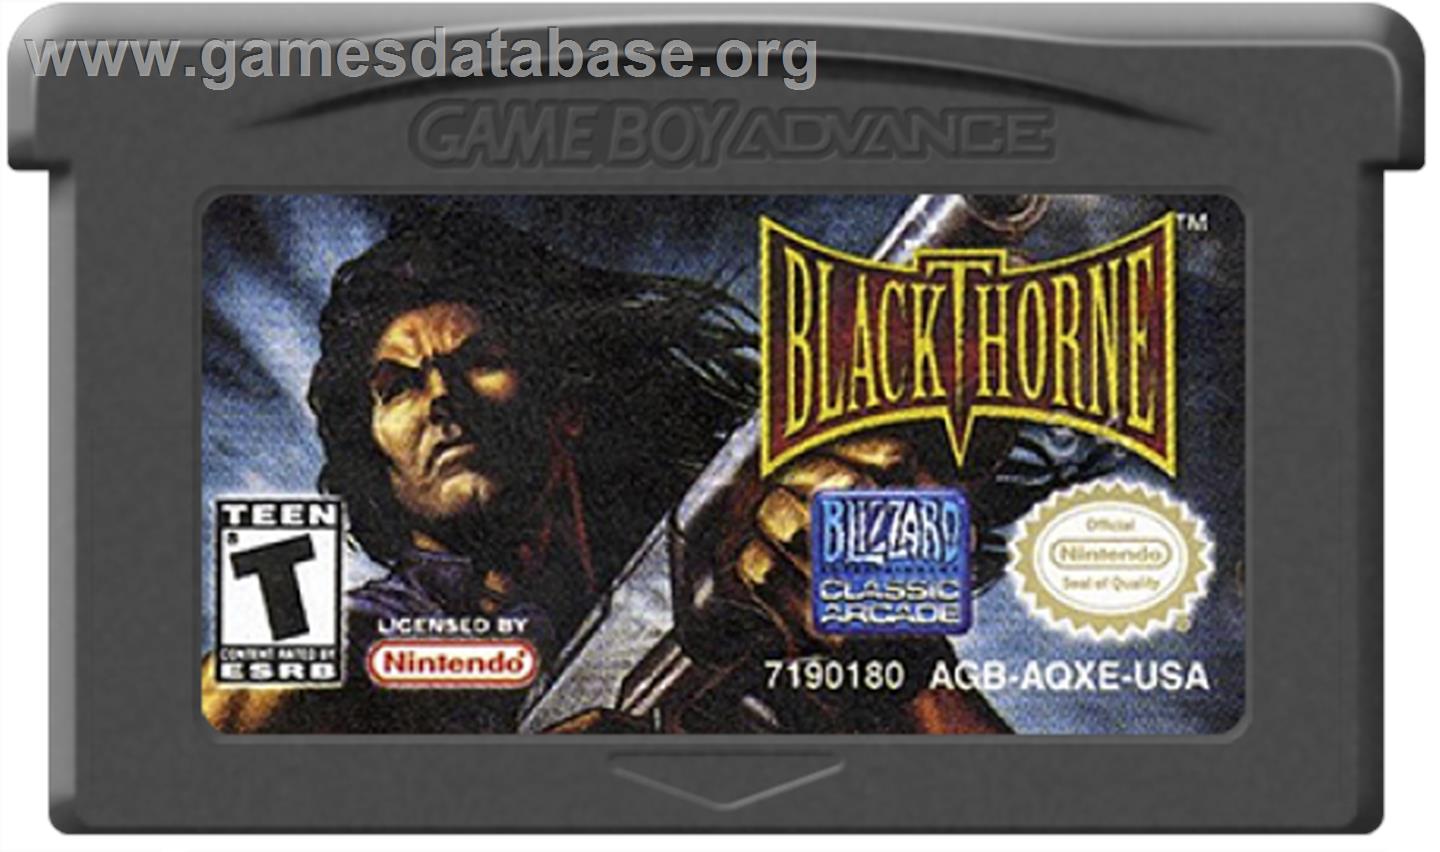 Blackthorne - Nintendo Game Boy Advance - Artwork - Cartridge